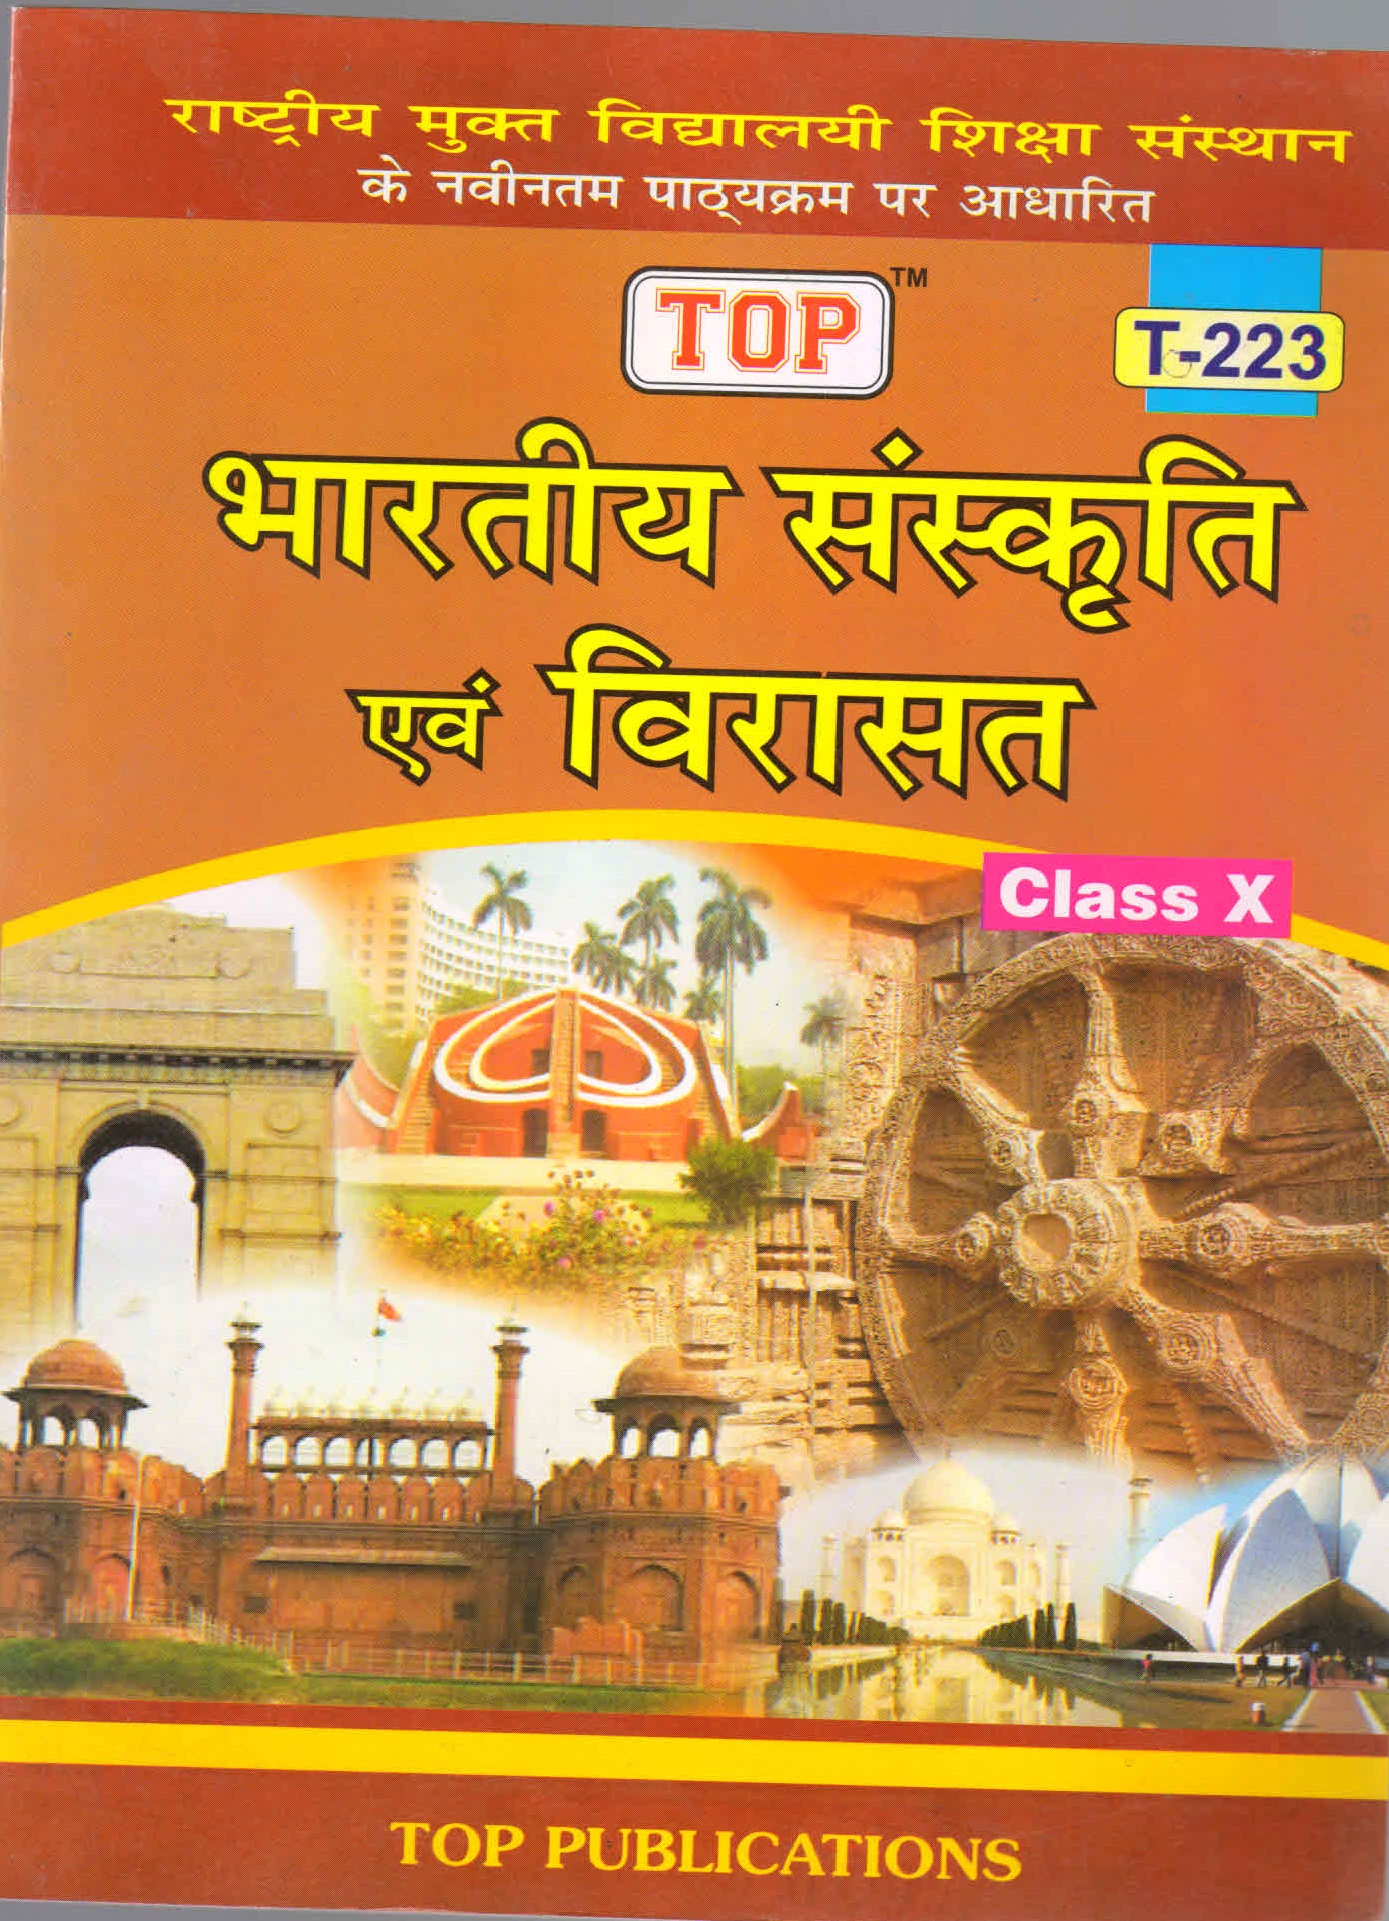 Nios 223 Indian Culture and Heritage (भारतीय संस्कृति एवं विरासत) Book